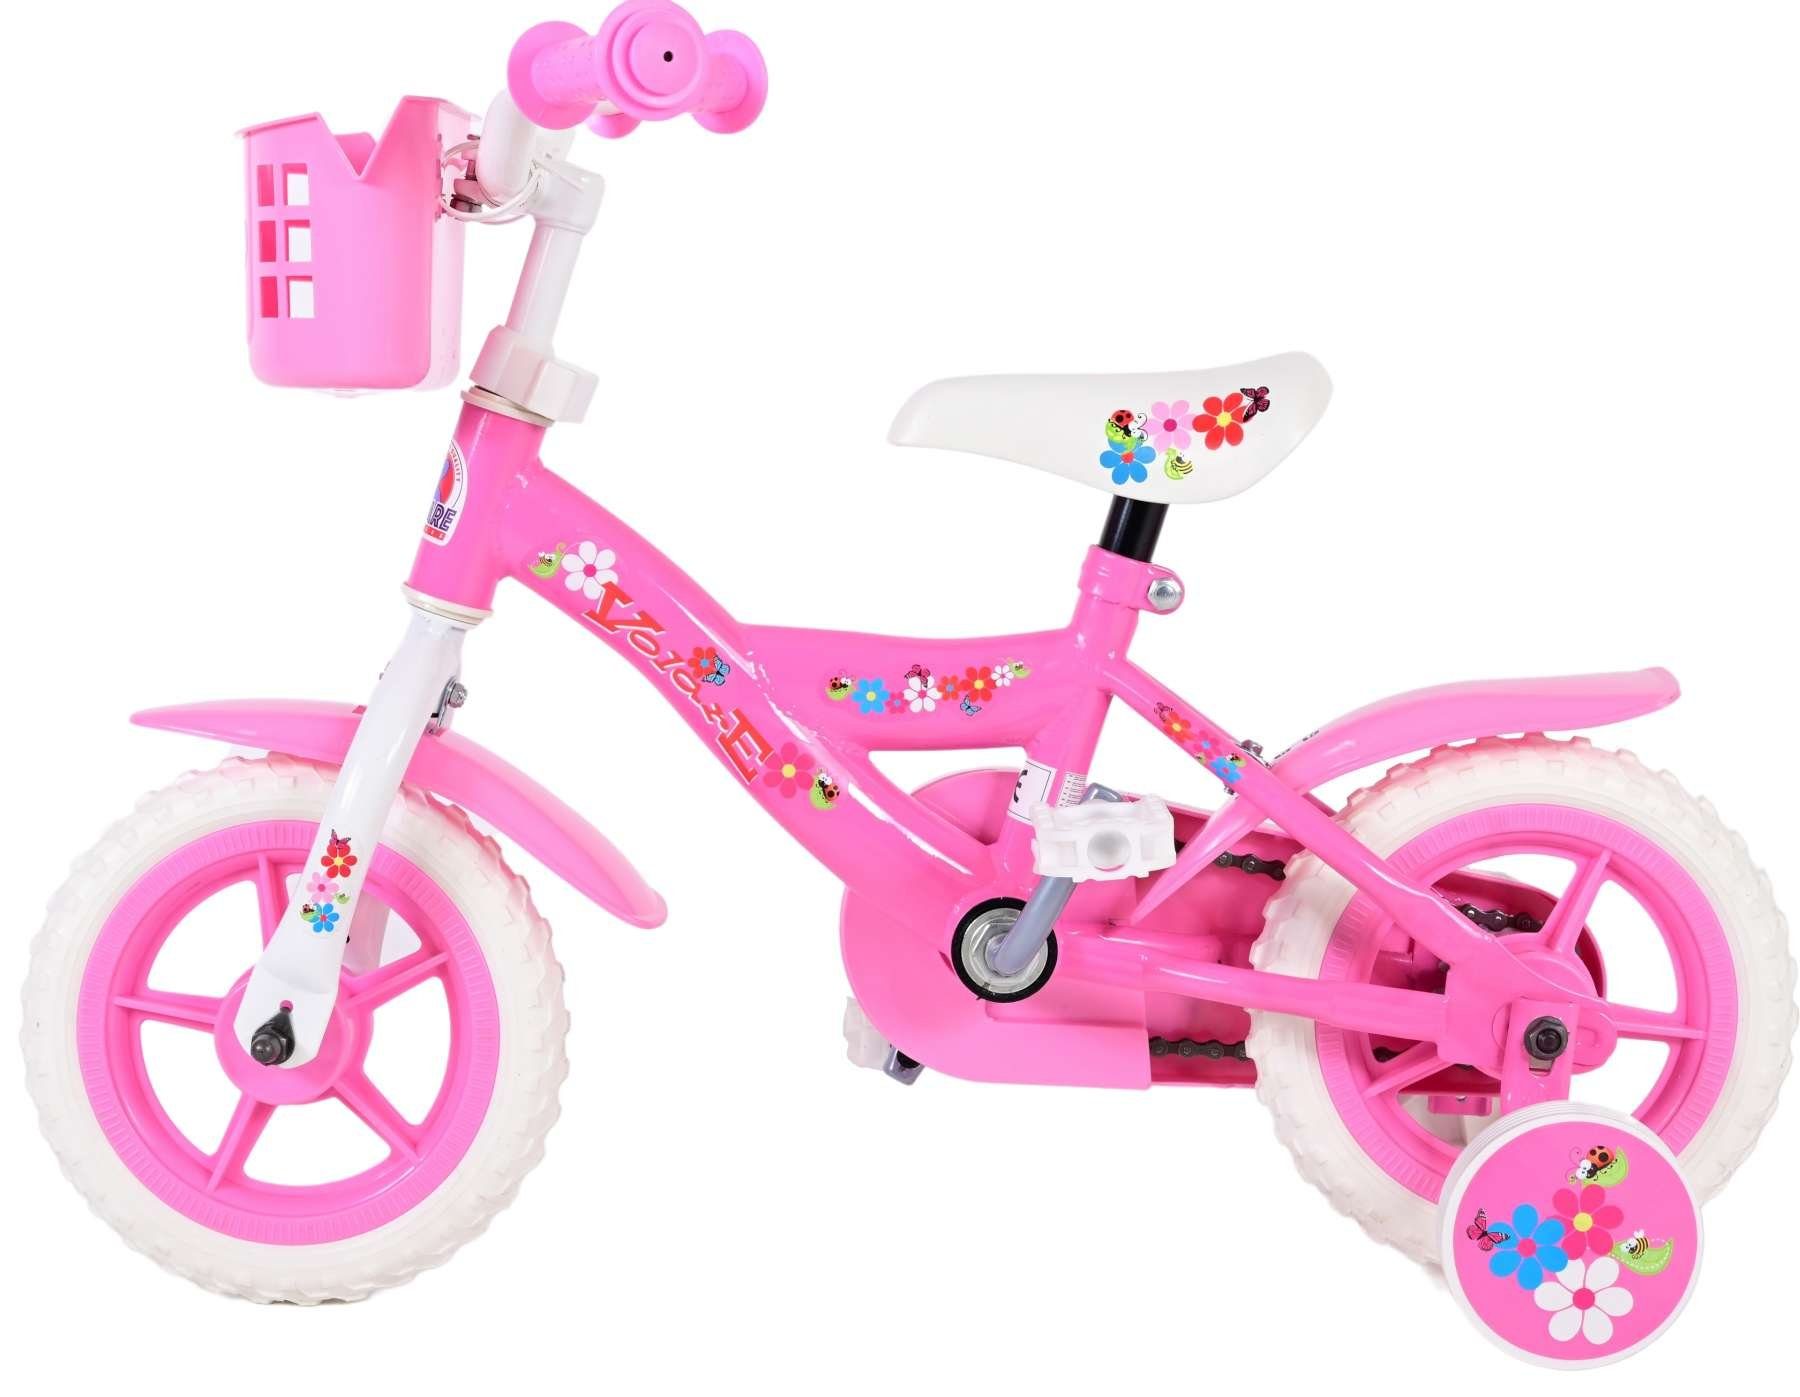 10 Flowerie LeNoSa Mädchen Kinderfahrrad Fahrrad Zoll für